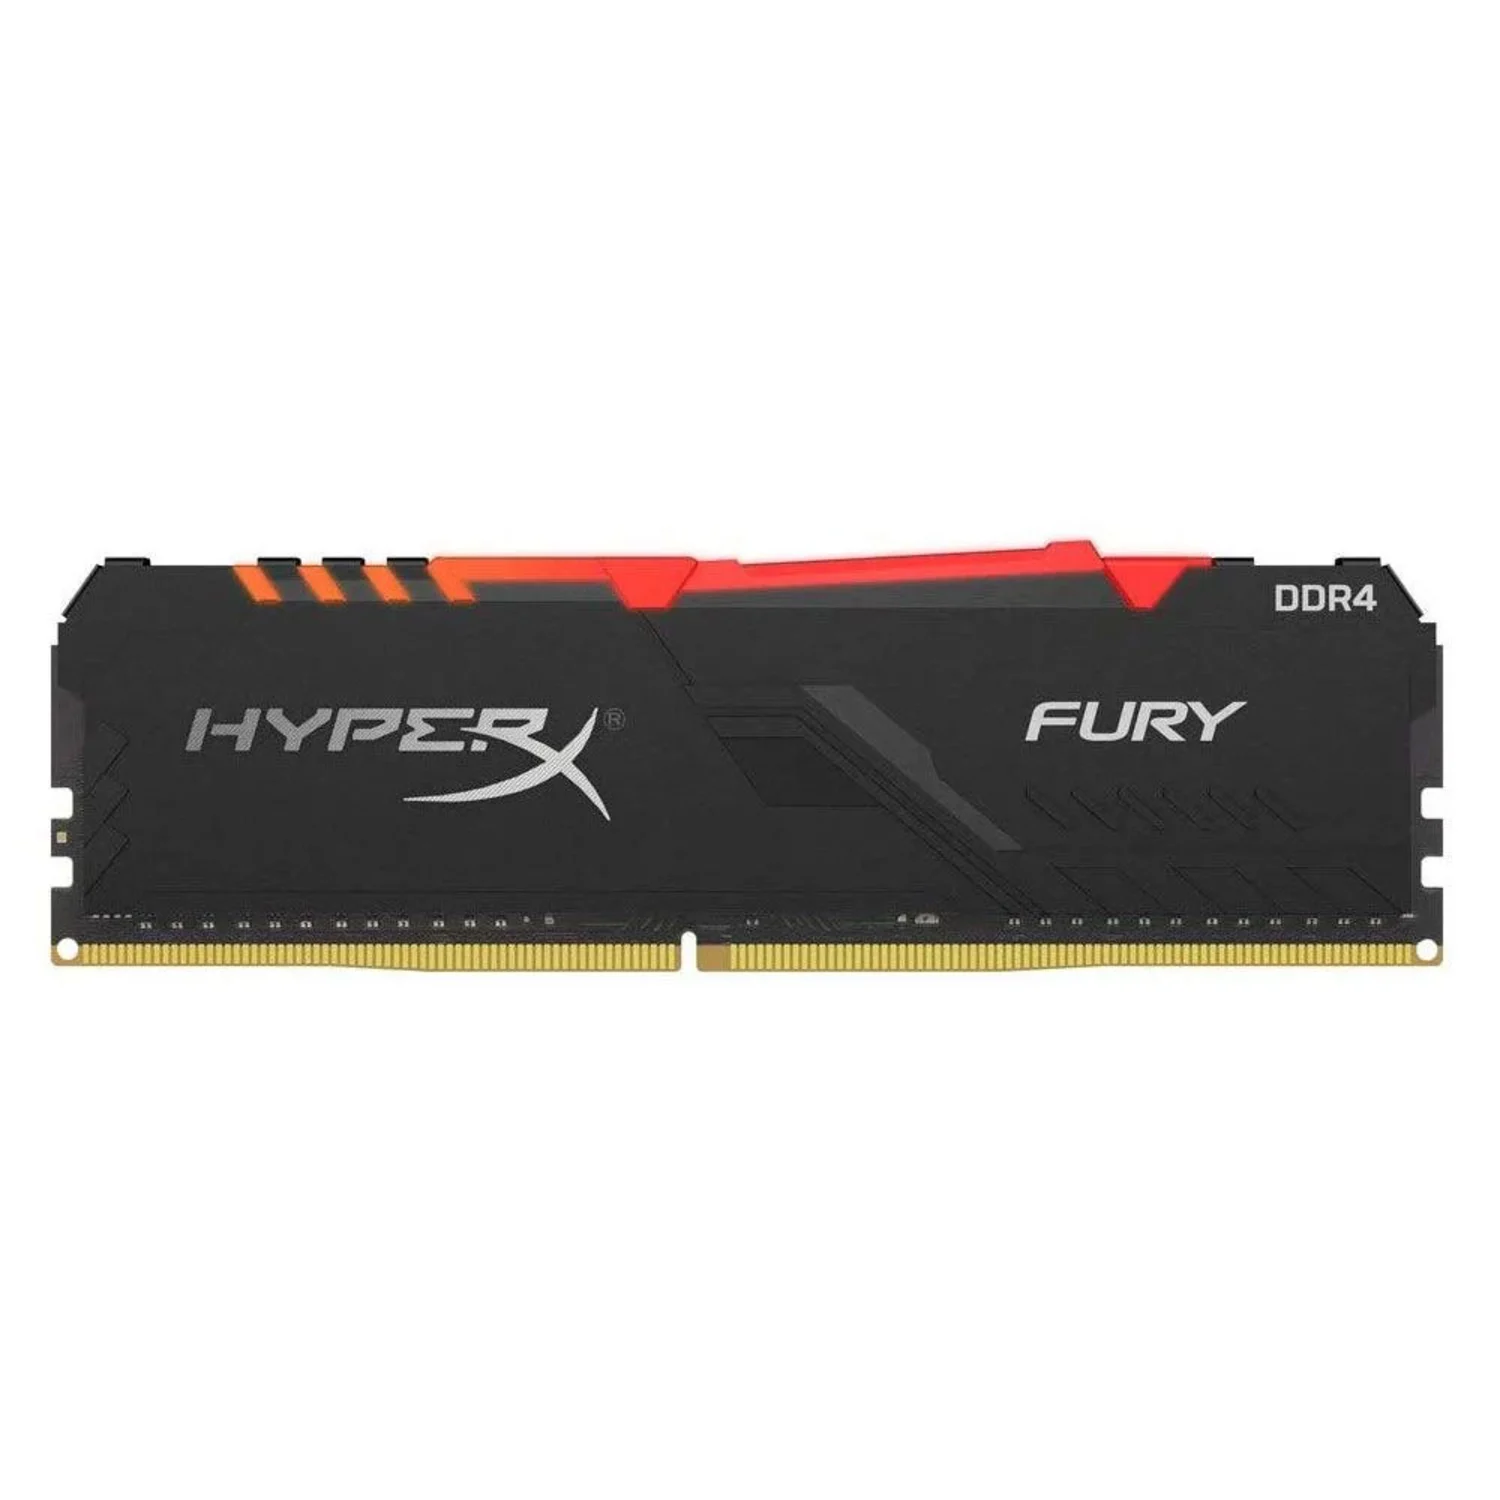 Memória Kingston Hyper-X Fury 8GB / DDR4 / 3466mhz 1x8GB / RGB - (HX434C16FB3A/8)